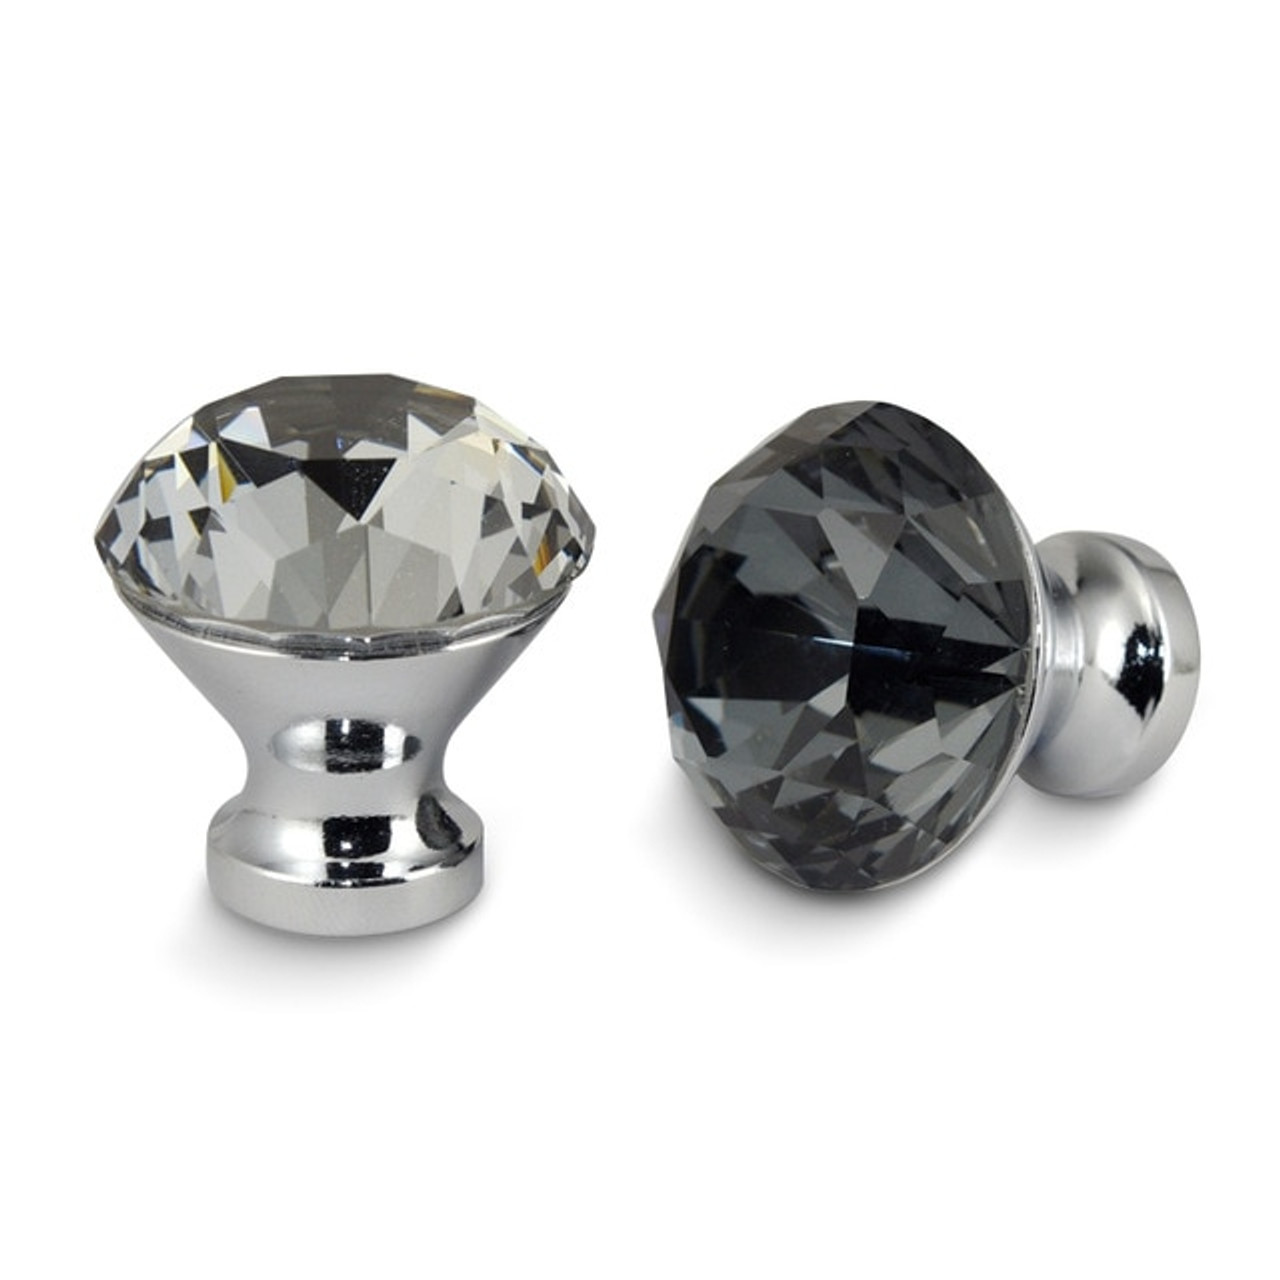 Kak 30mm Kitchen Cabinet Handles Diamond Shape Design Crystal Glass Knobs Cupboard Pulls Drawer Knobs Furniture Handle Hardware Cabinet Pulls Borna S General Hardware Ltd